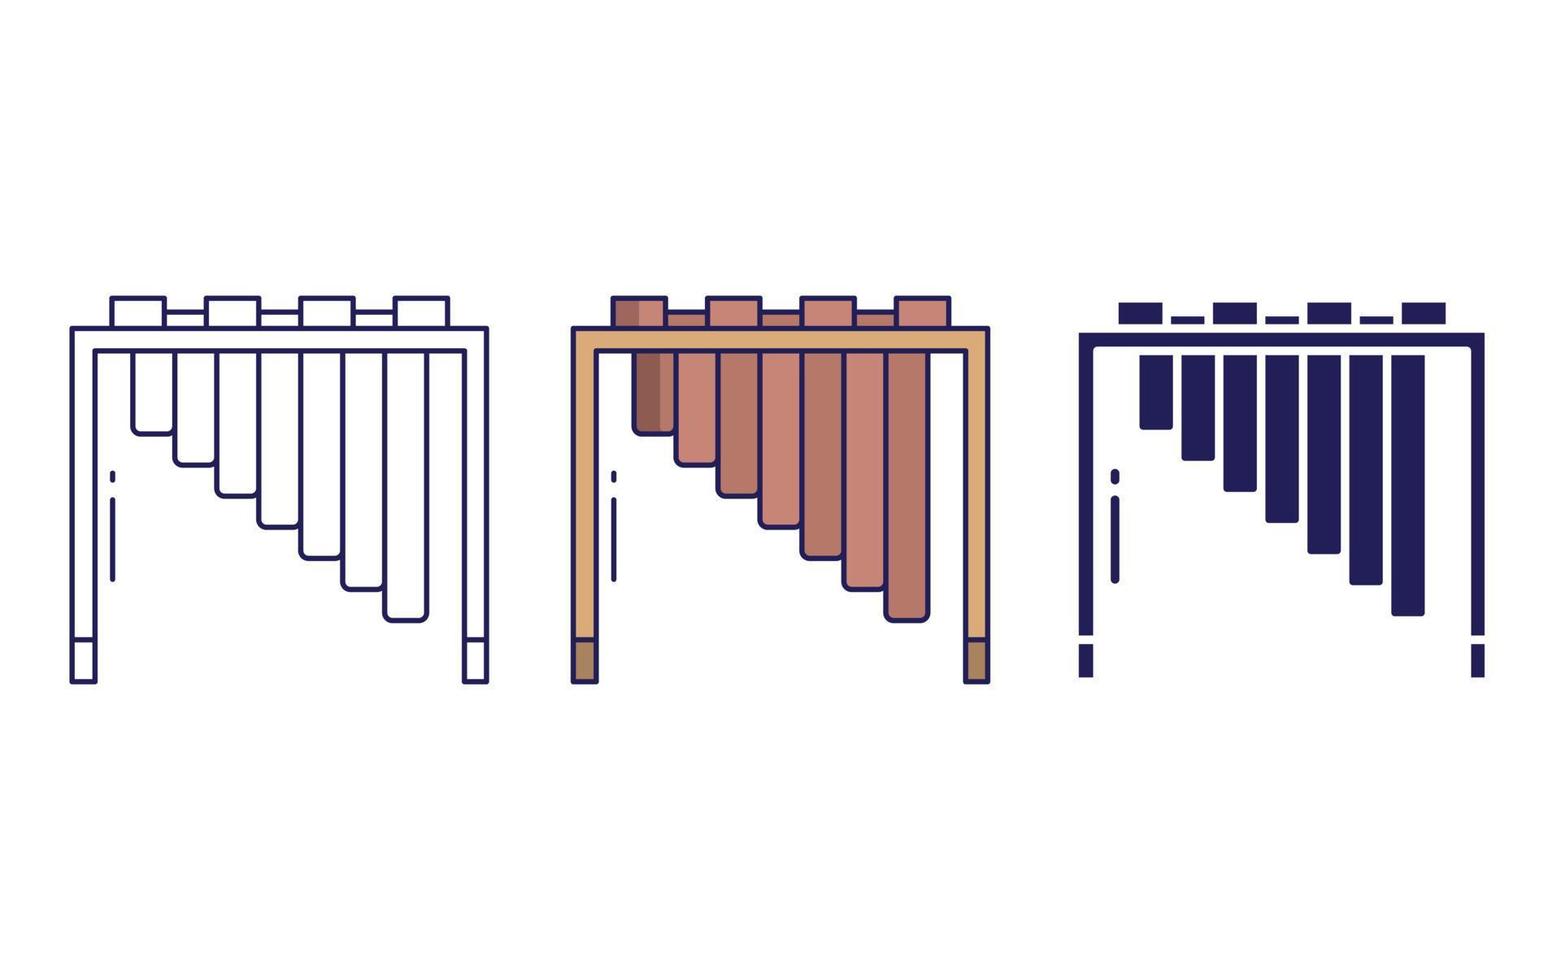 Marimba vector icon